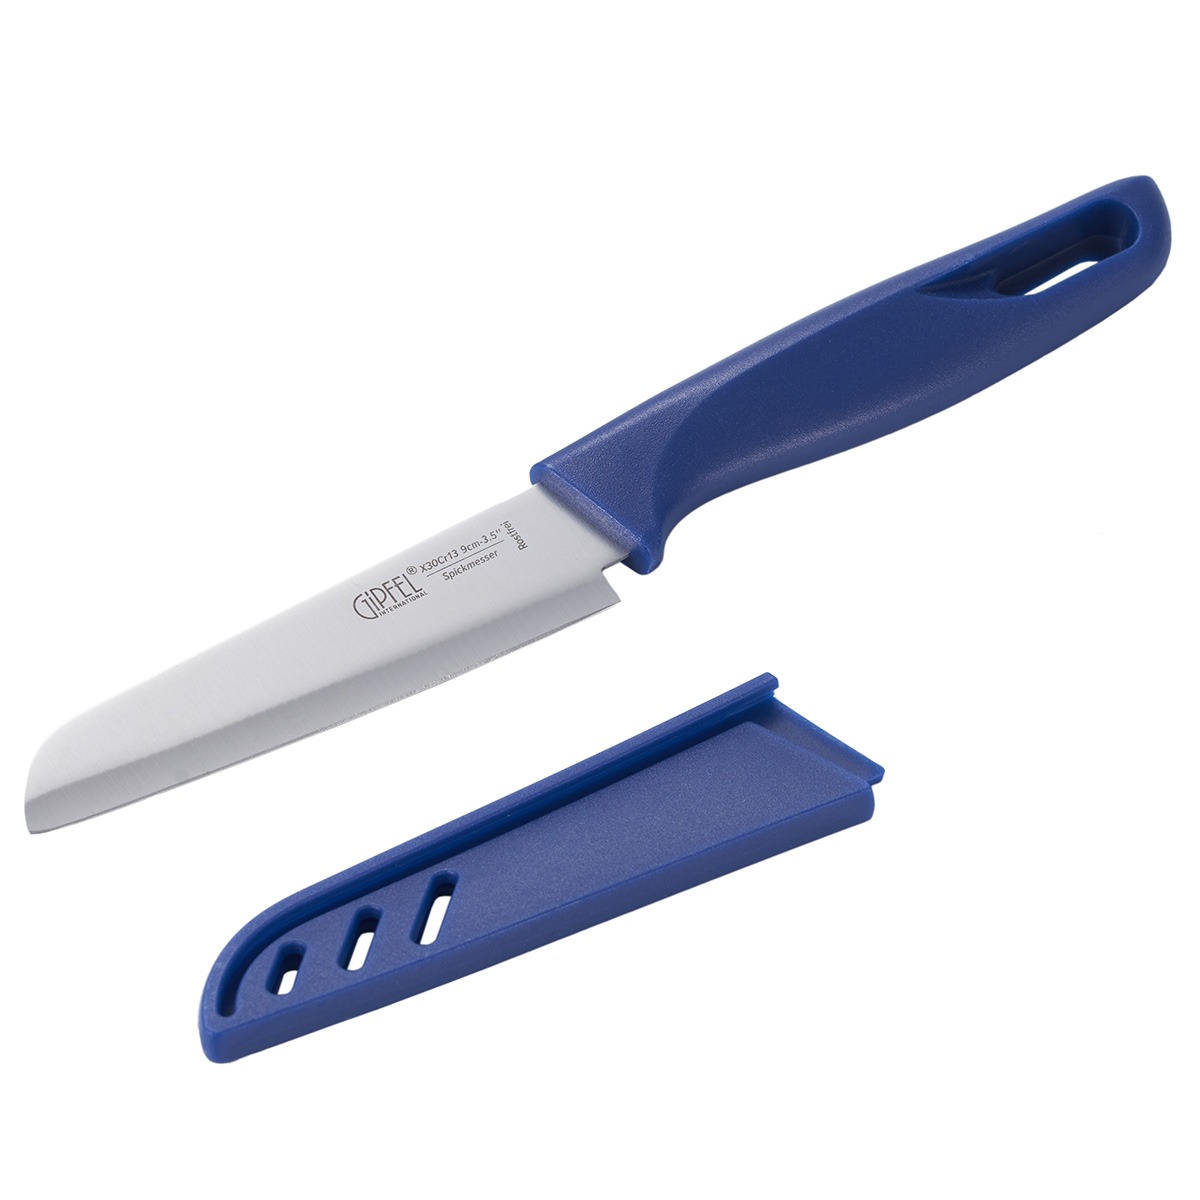 Нож для чистки овощей Gipfel Sorti стальной синий 9 см нож для чистки овощей gipfel vilmarin 8 см